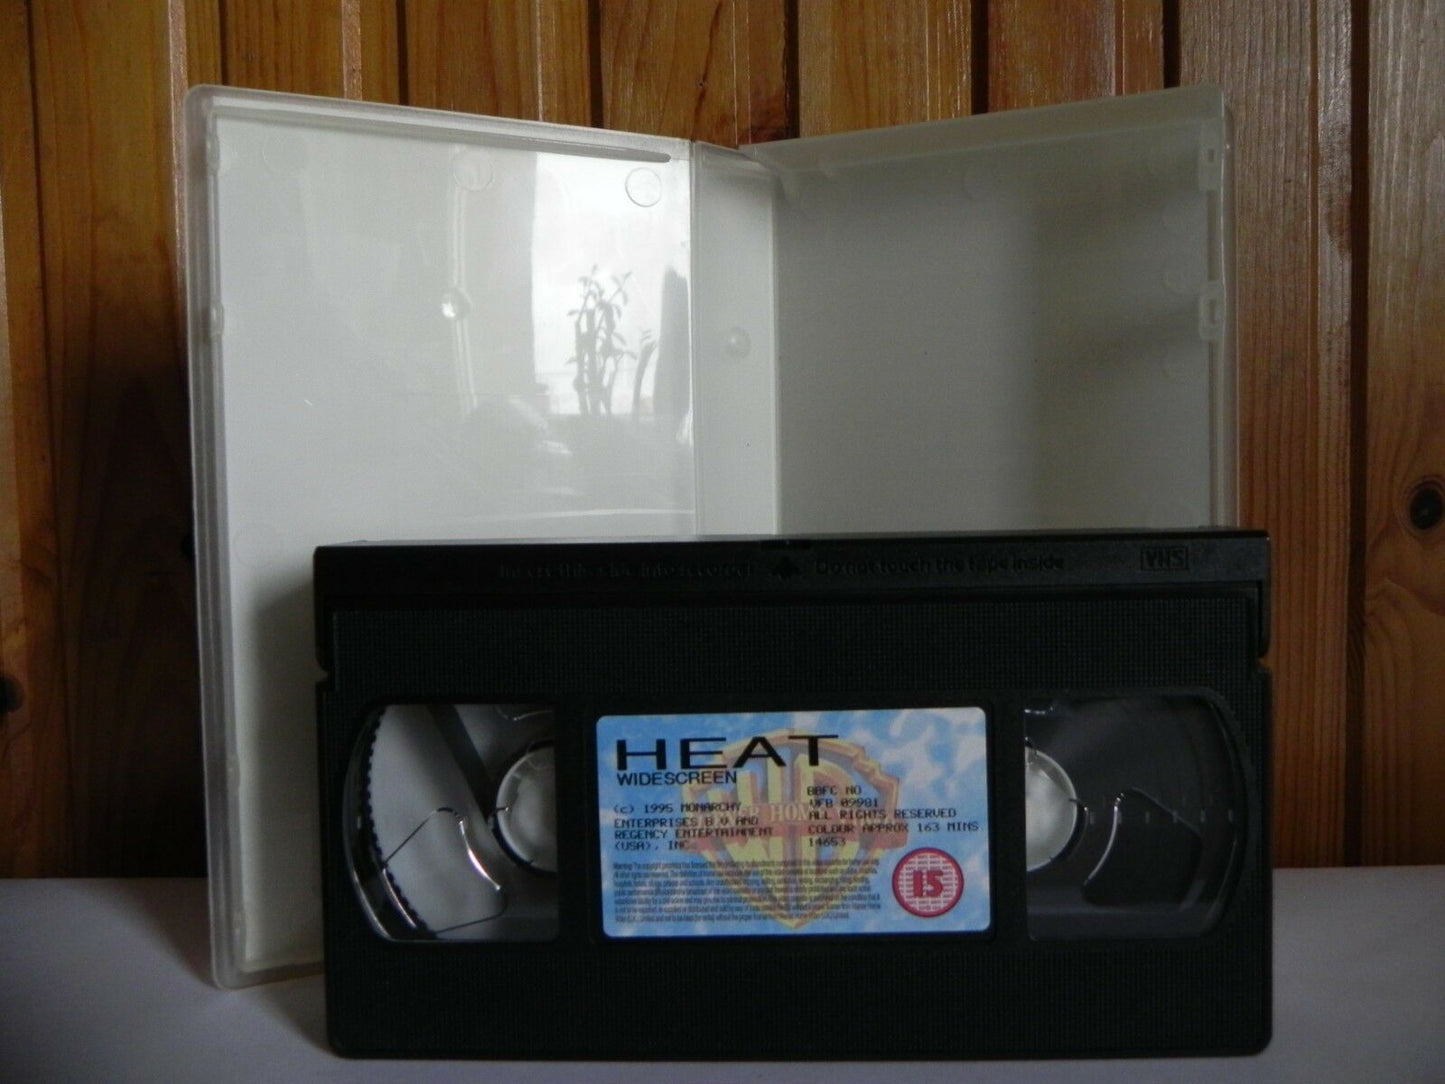 Heat: Widescreen Version - Al Pacino/DeNiro - Bullet Fest - Crime Action - VHS-